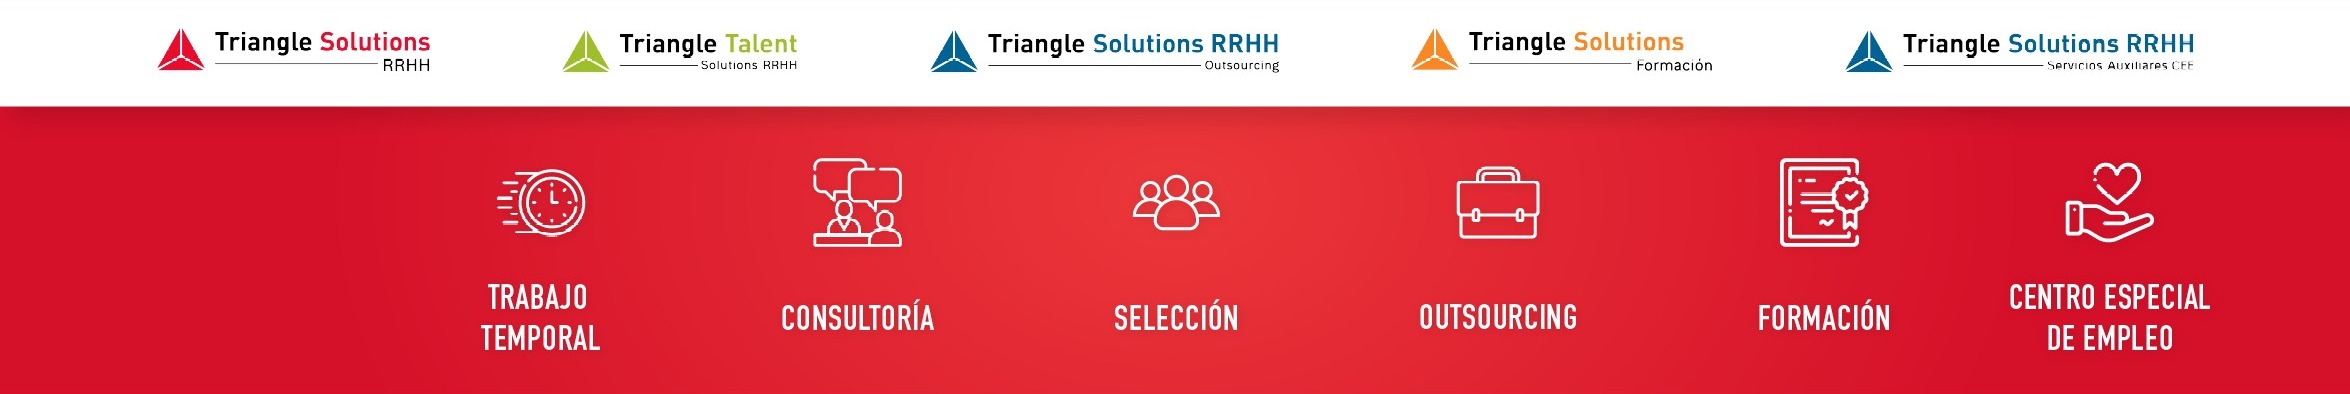 Triangle Solutions RH Belgique background